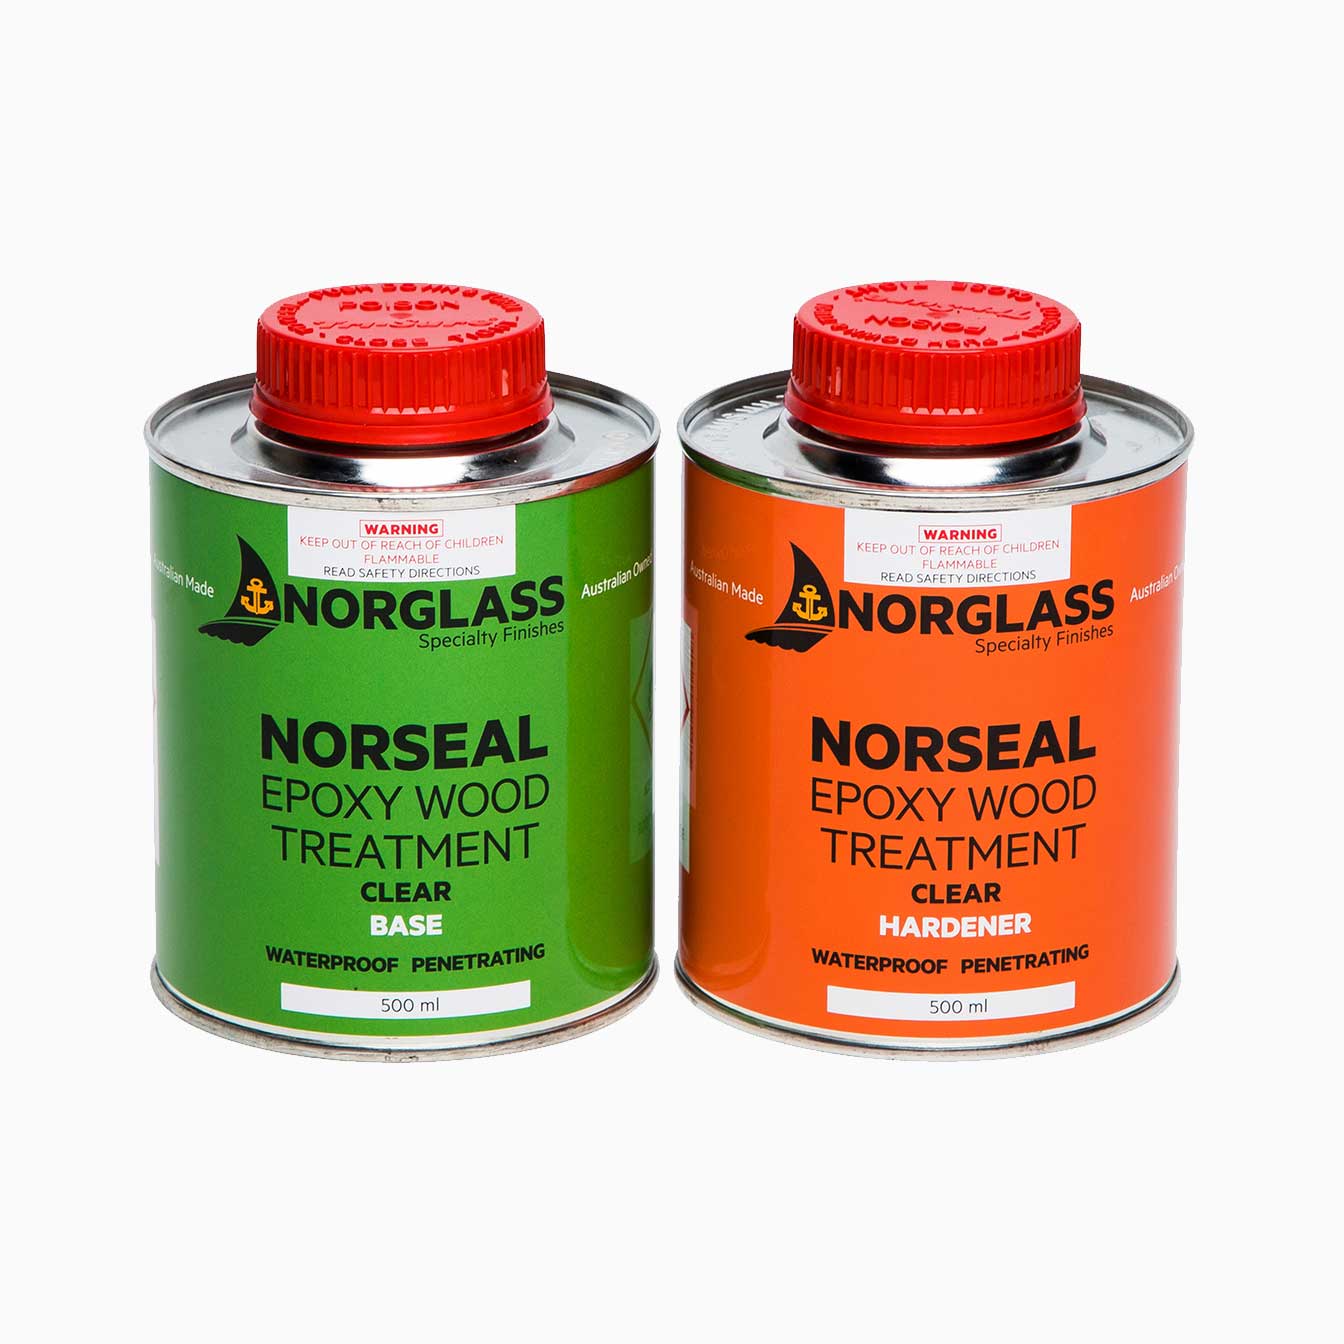 Norseal Epoxy Wood Treatment - Base and Hardener